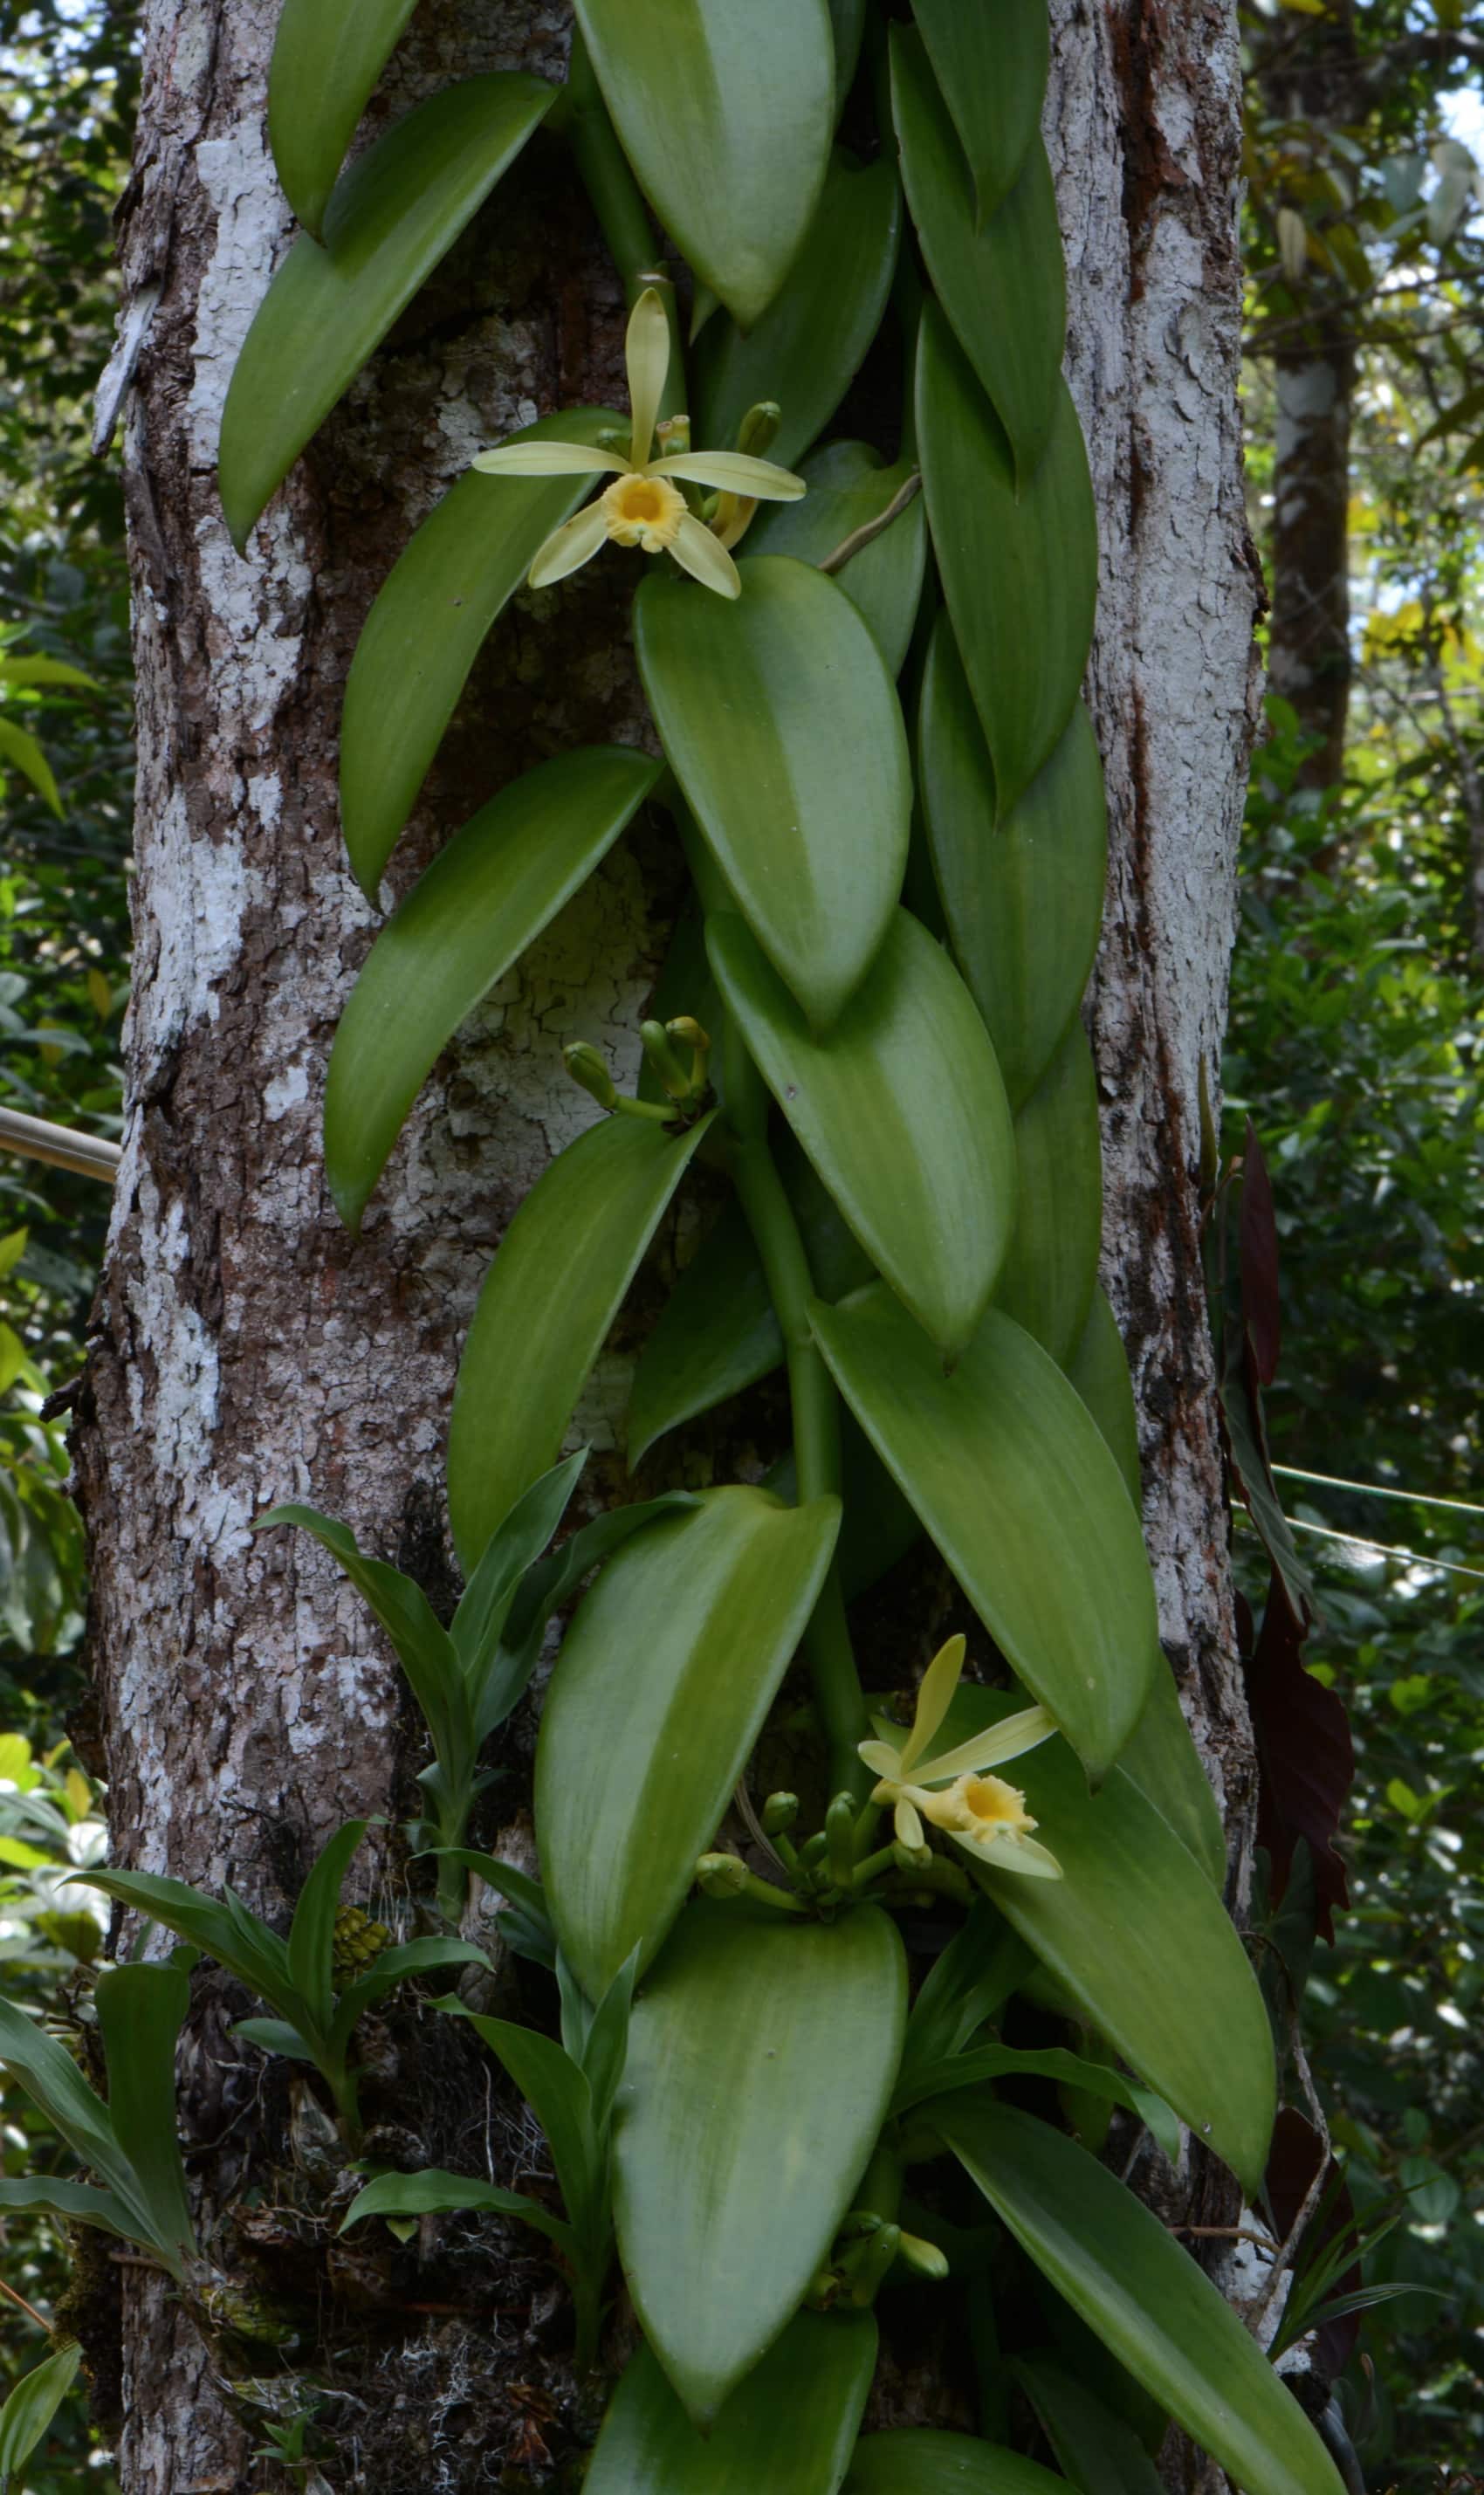 Vanilla plants. Орхидеи Vanilla planifolia. Орхидея ваниль вариегатная (Vanilla planifolia). Cleisostoma arietinum. Ваниль на дереве или цветок.